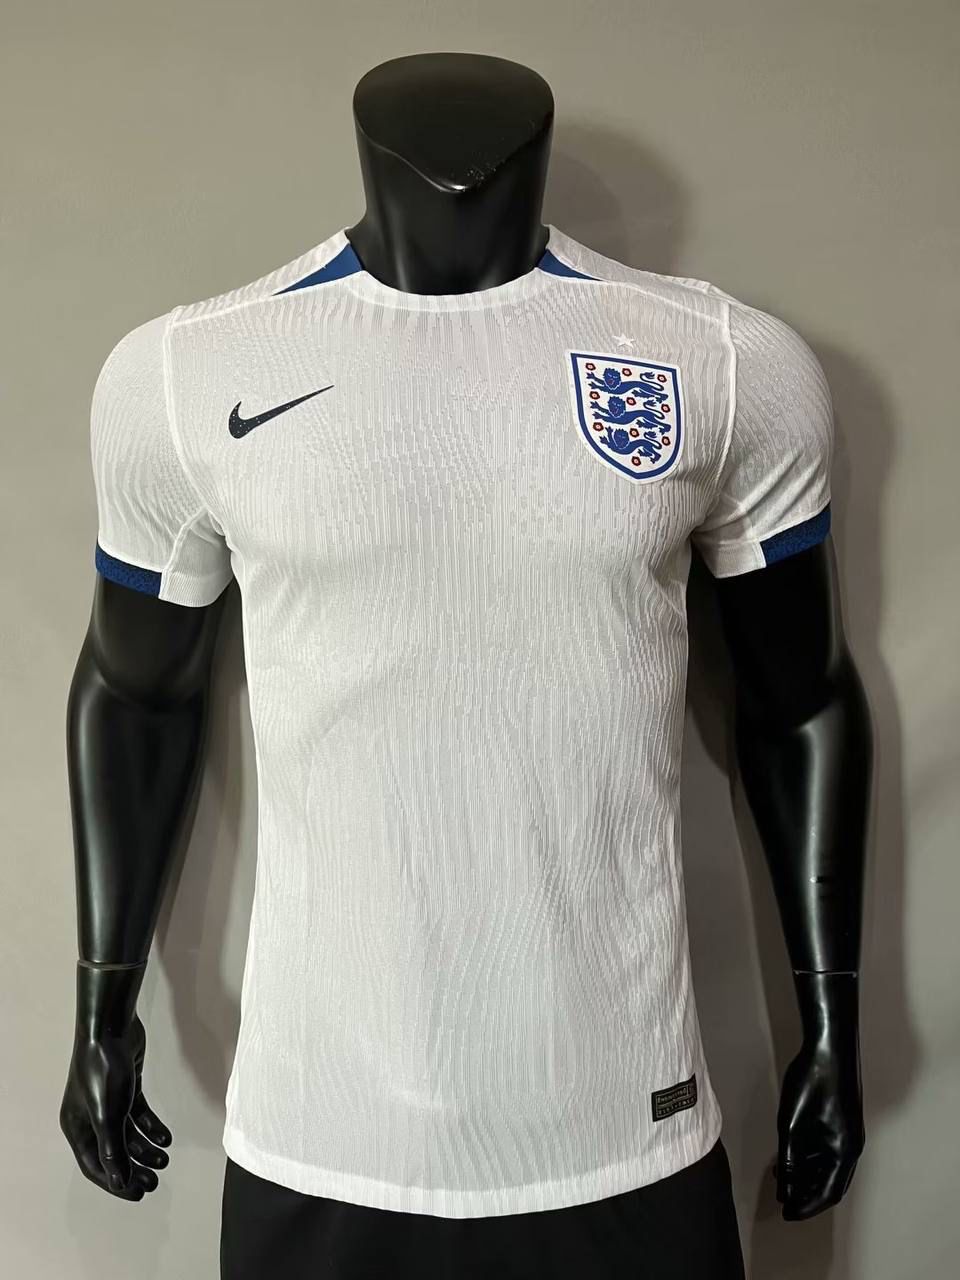 England shirt